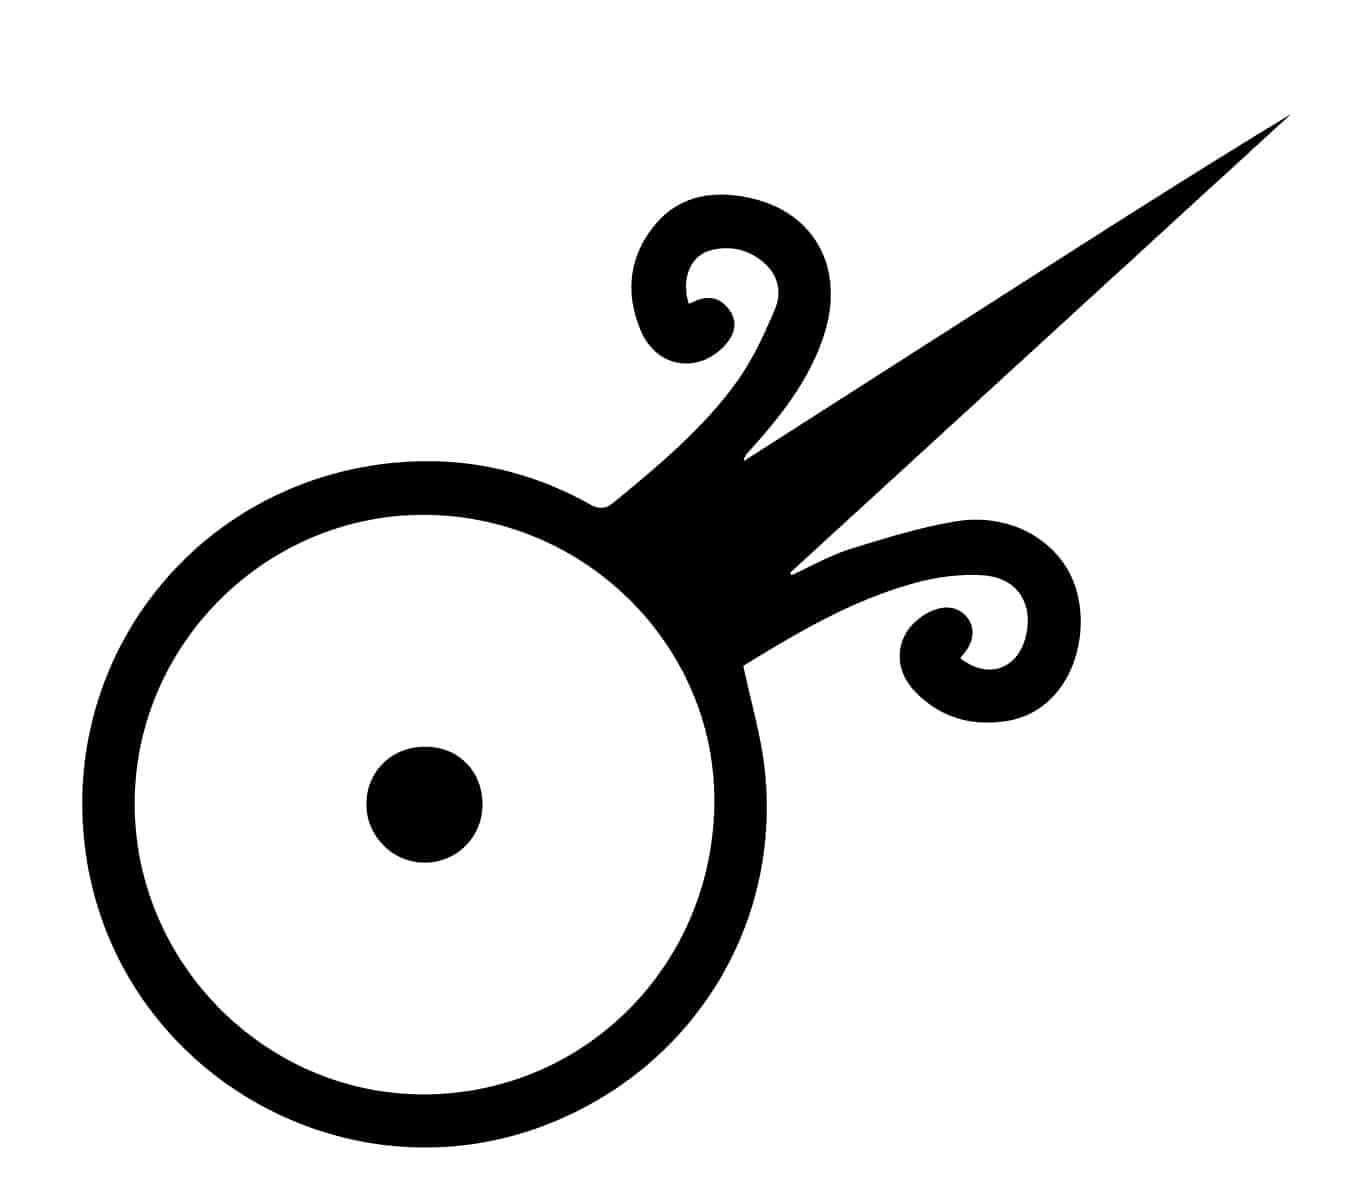 mercury alchemy symbol